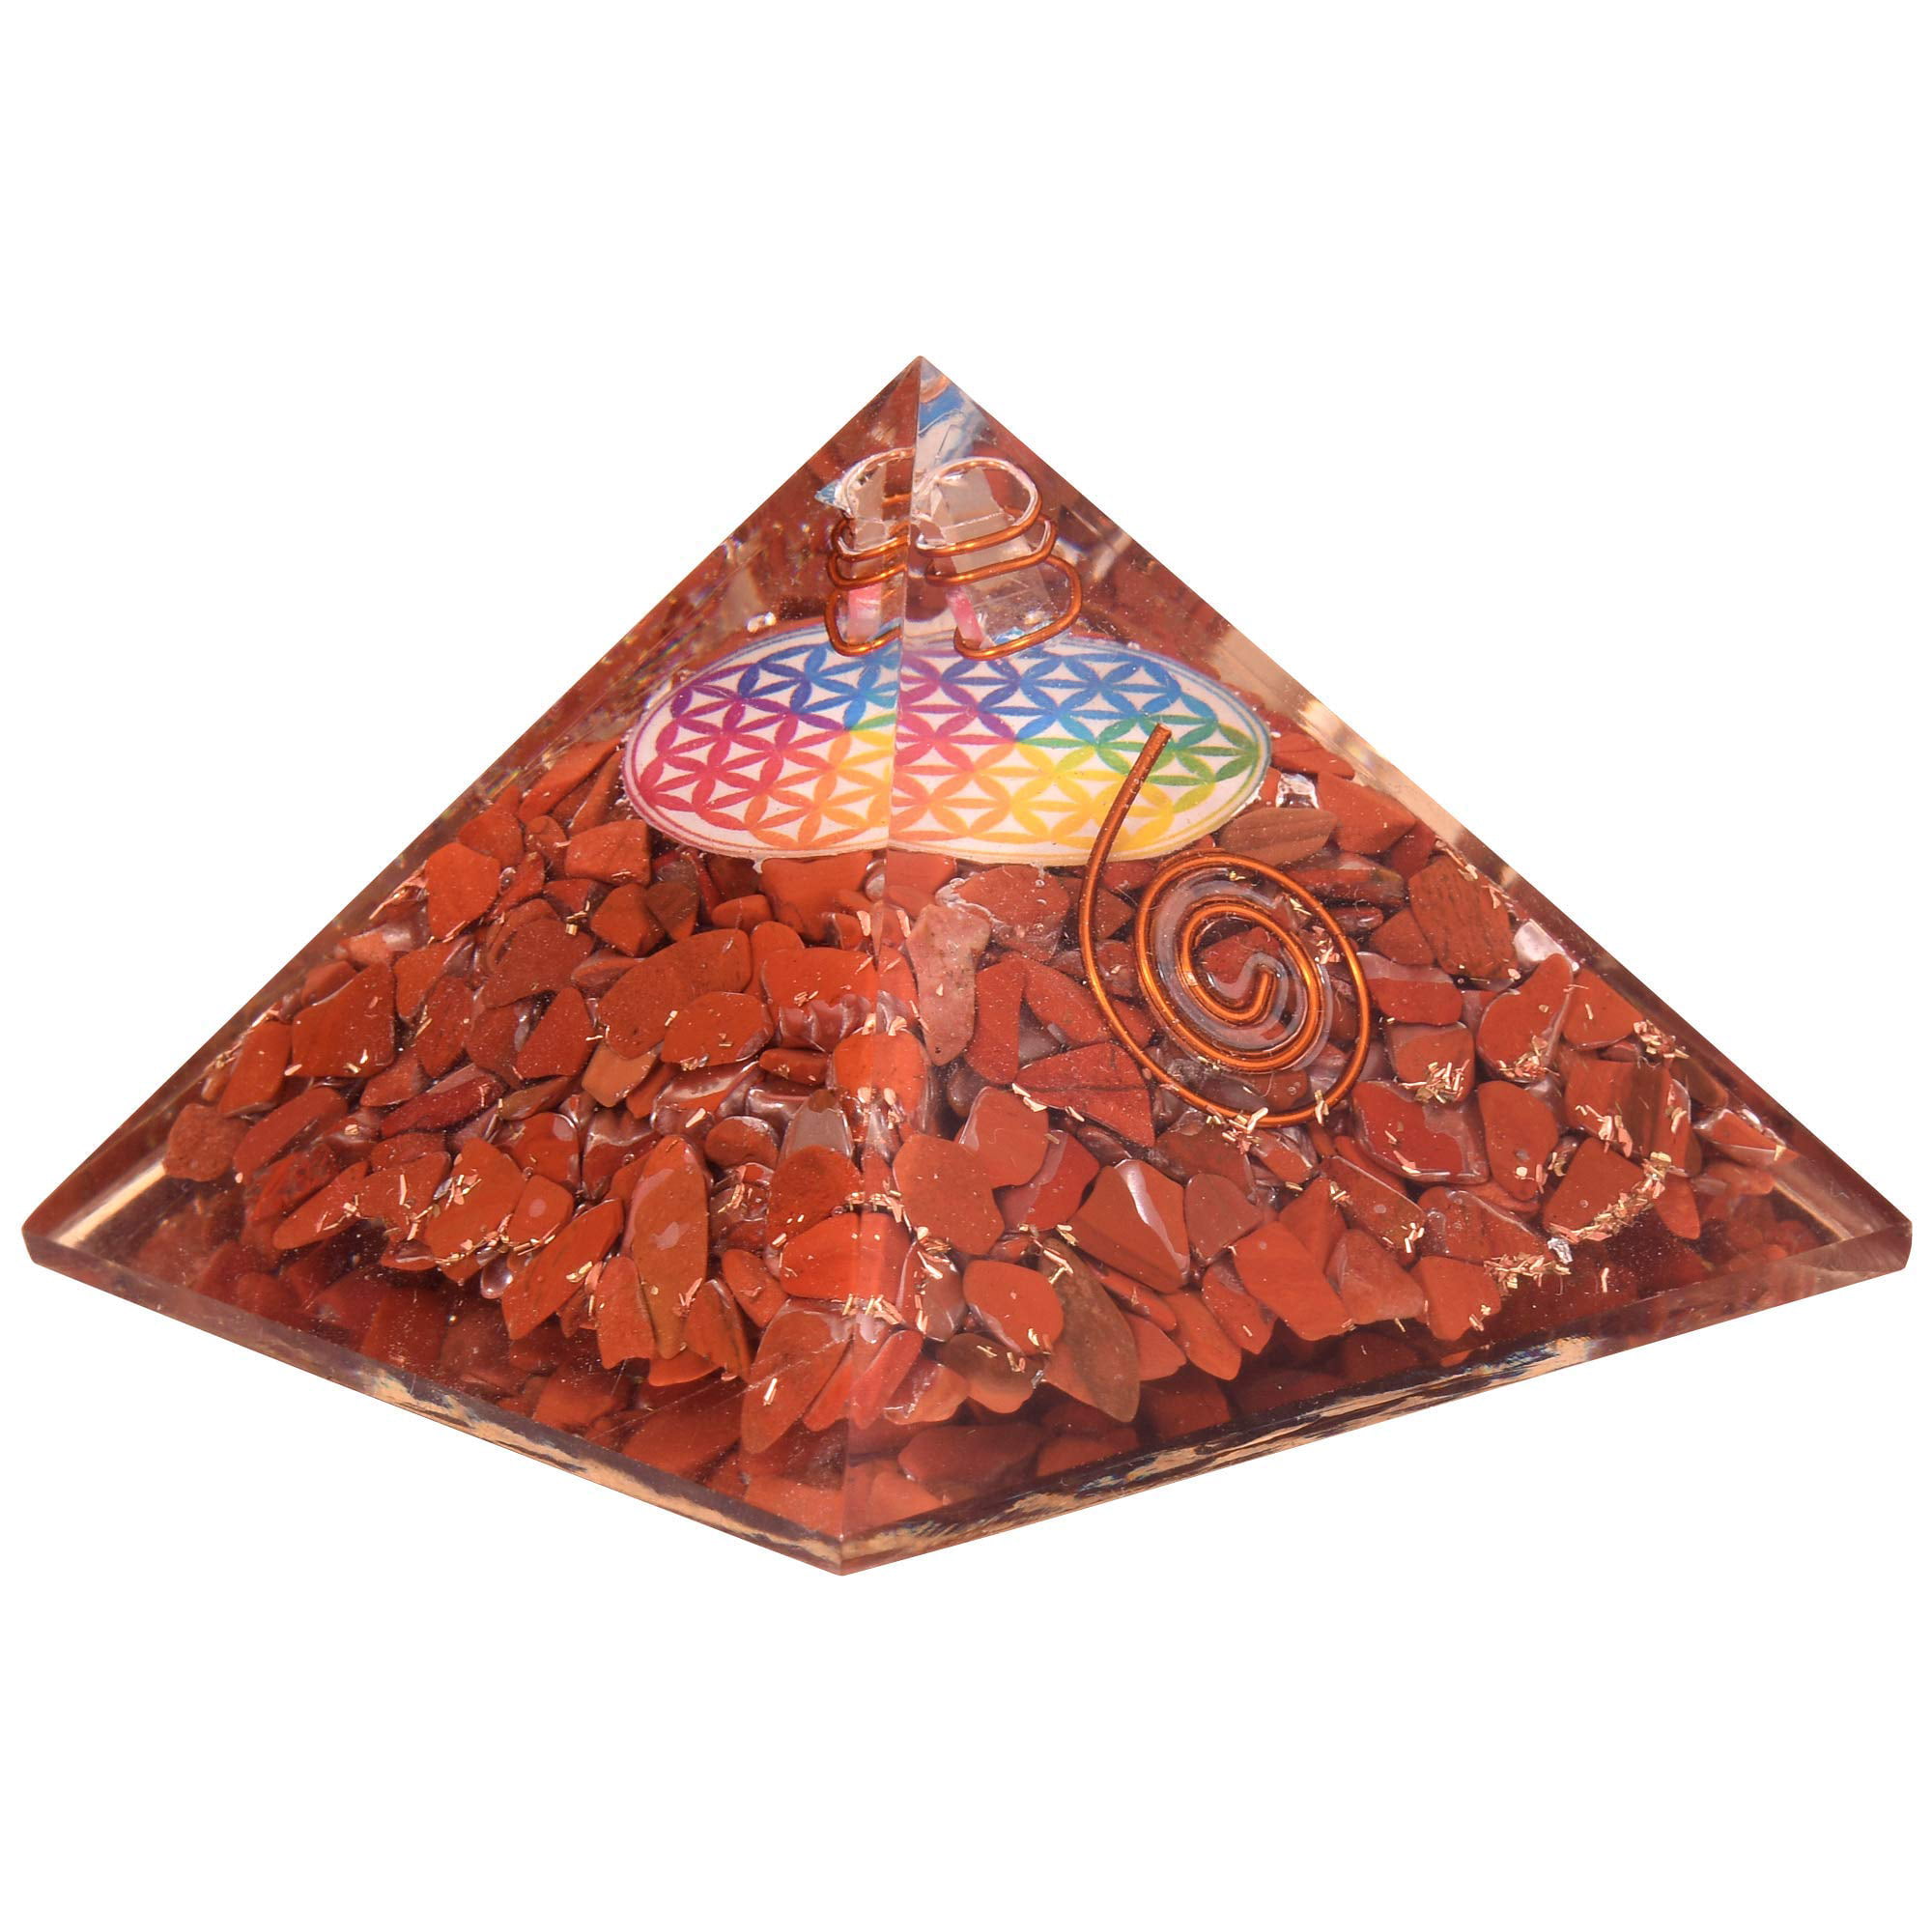 Superwave Orgone Pyramid Large Red Jasper Crystal Energy Generator EMF Protection Meditation Healing Flower of Life 